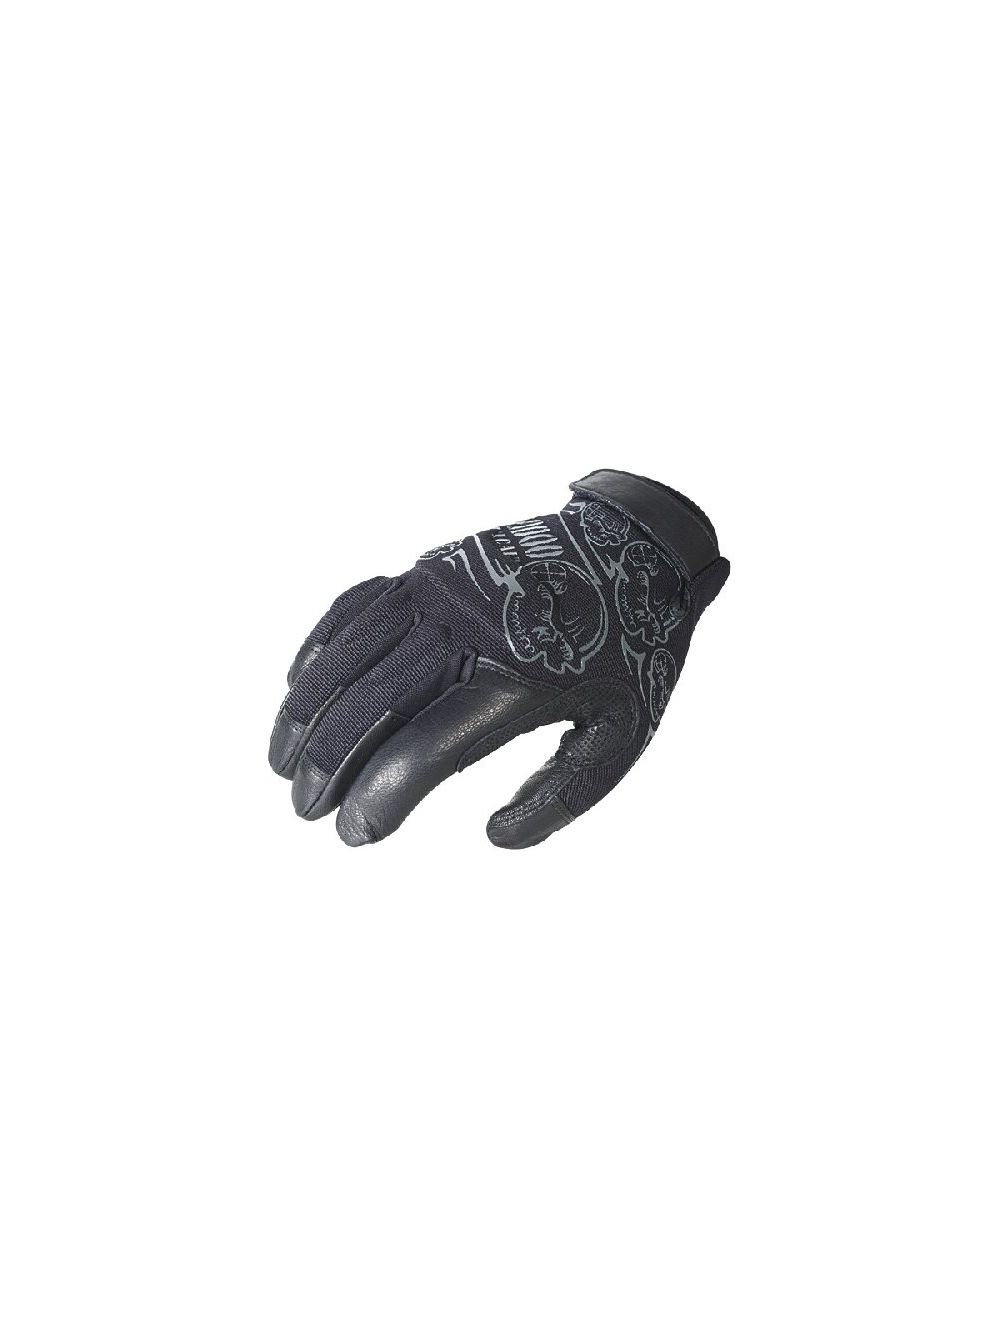 Liberator Gloves